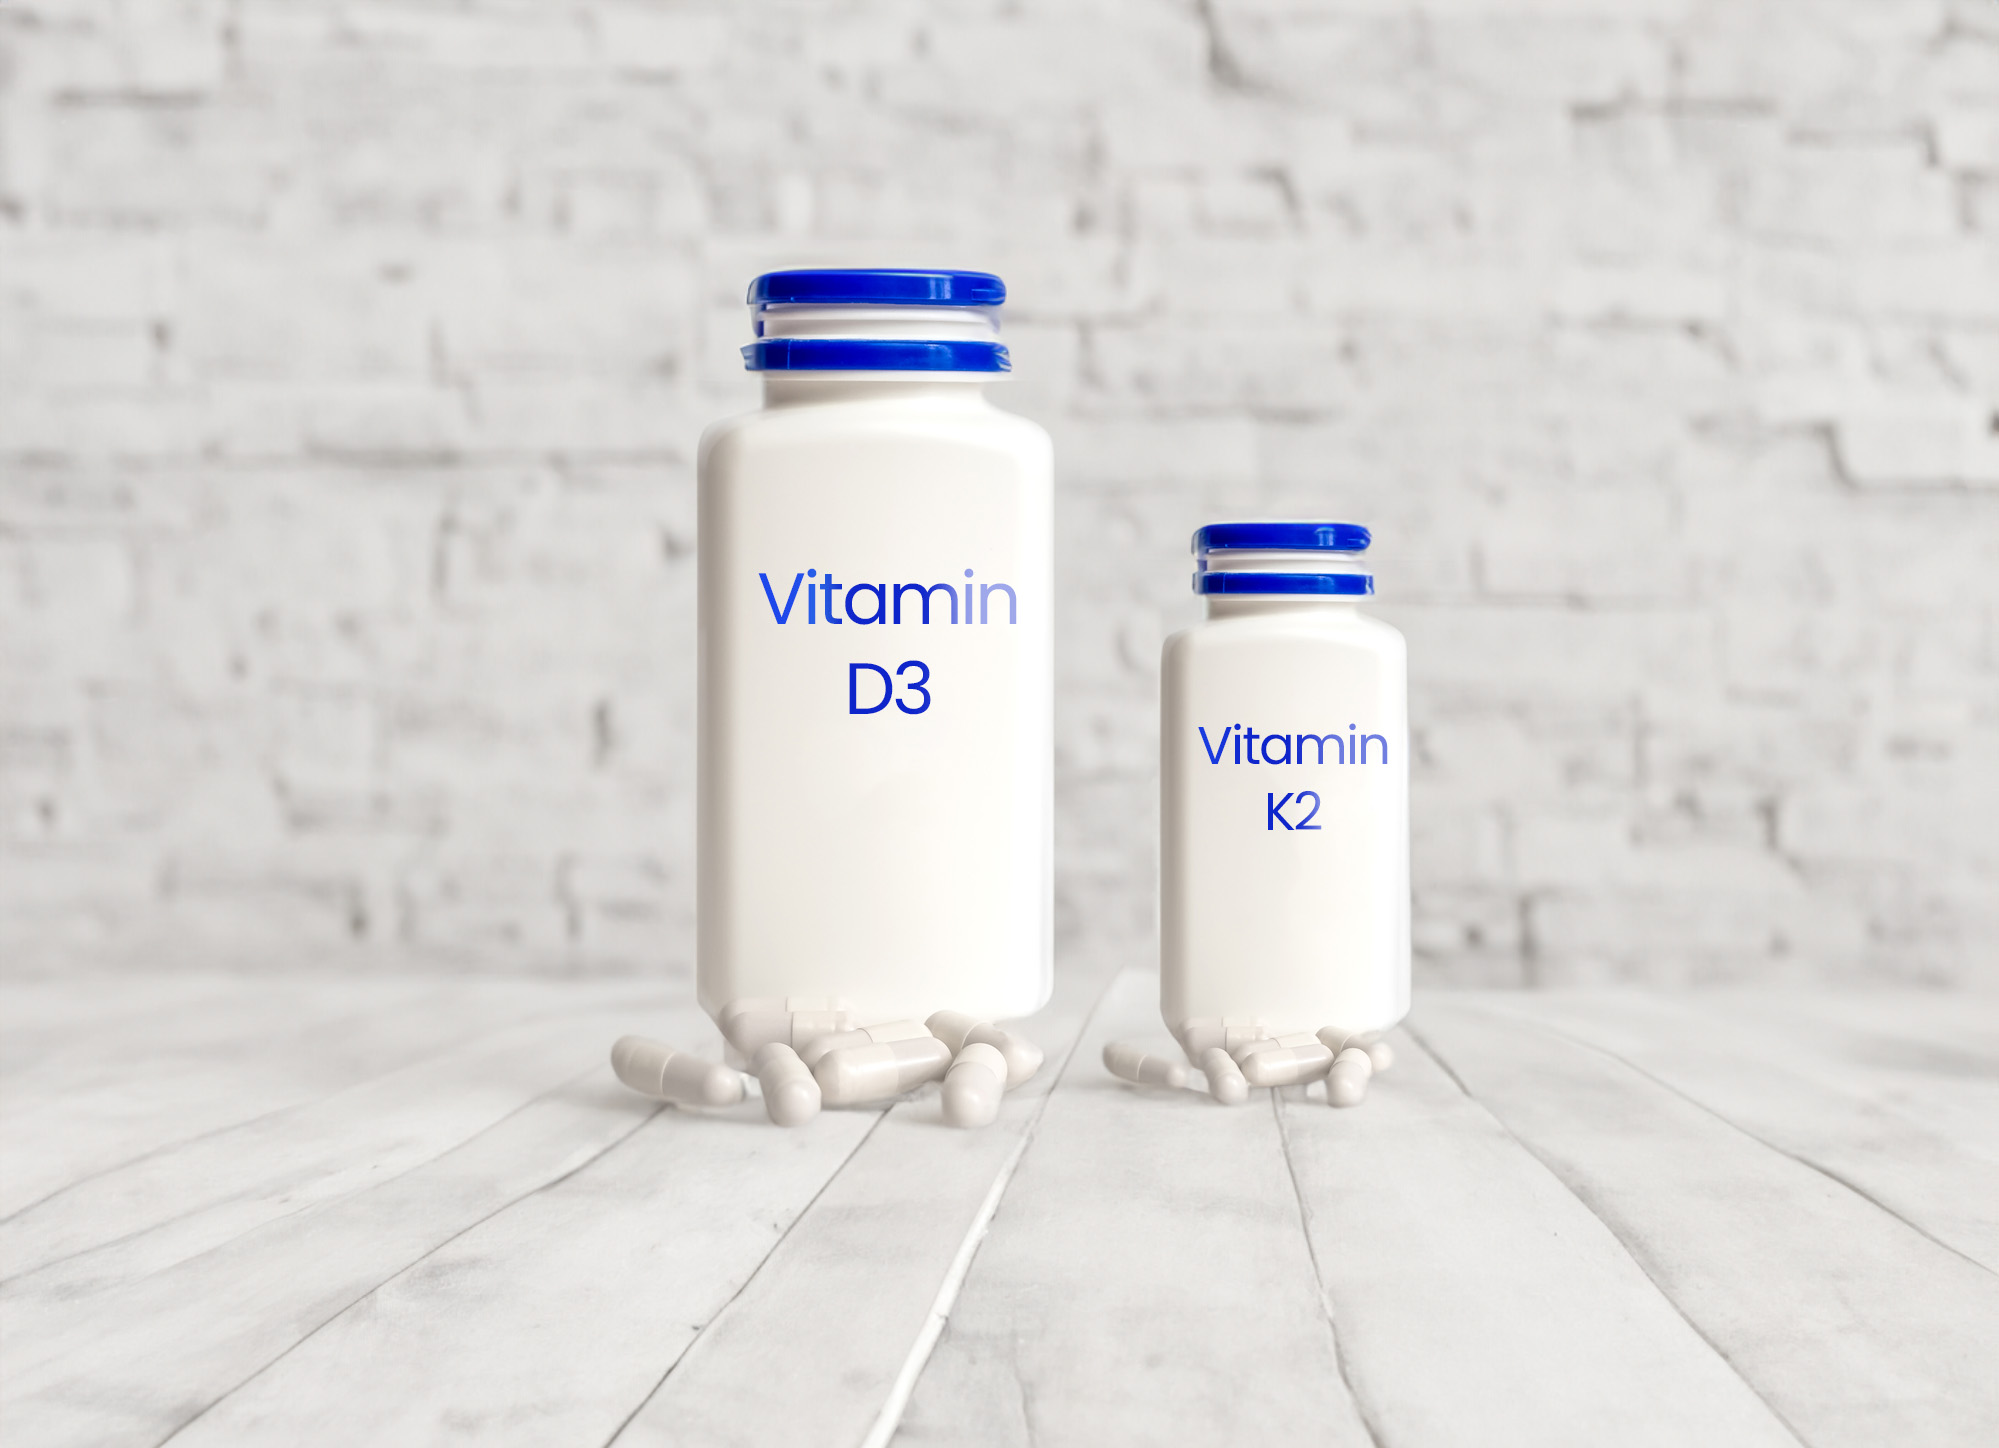 TOSM-Blog-dosage-vitamin D-Vitamin k2